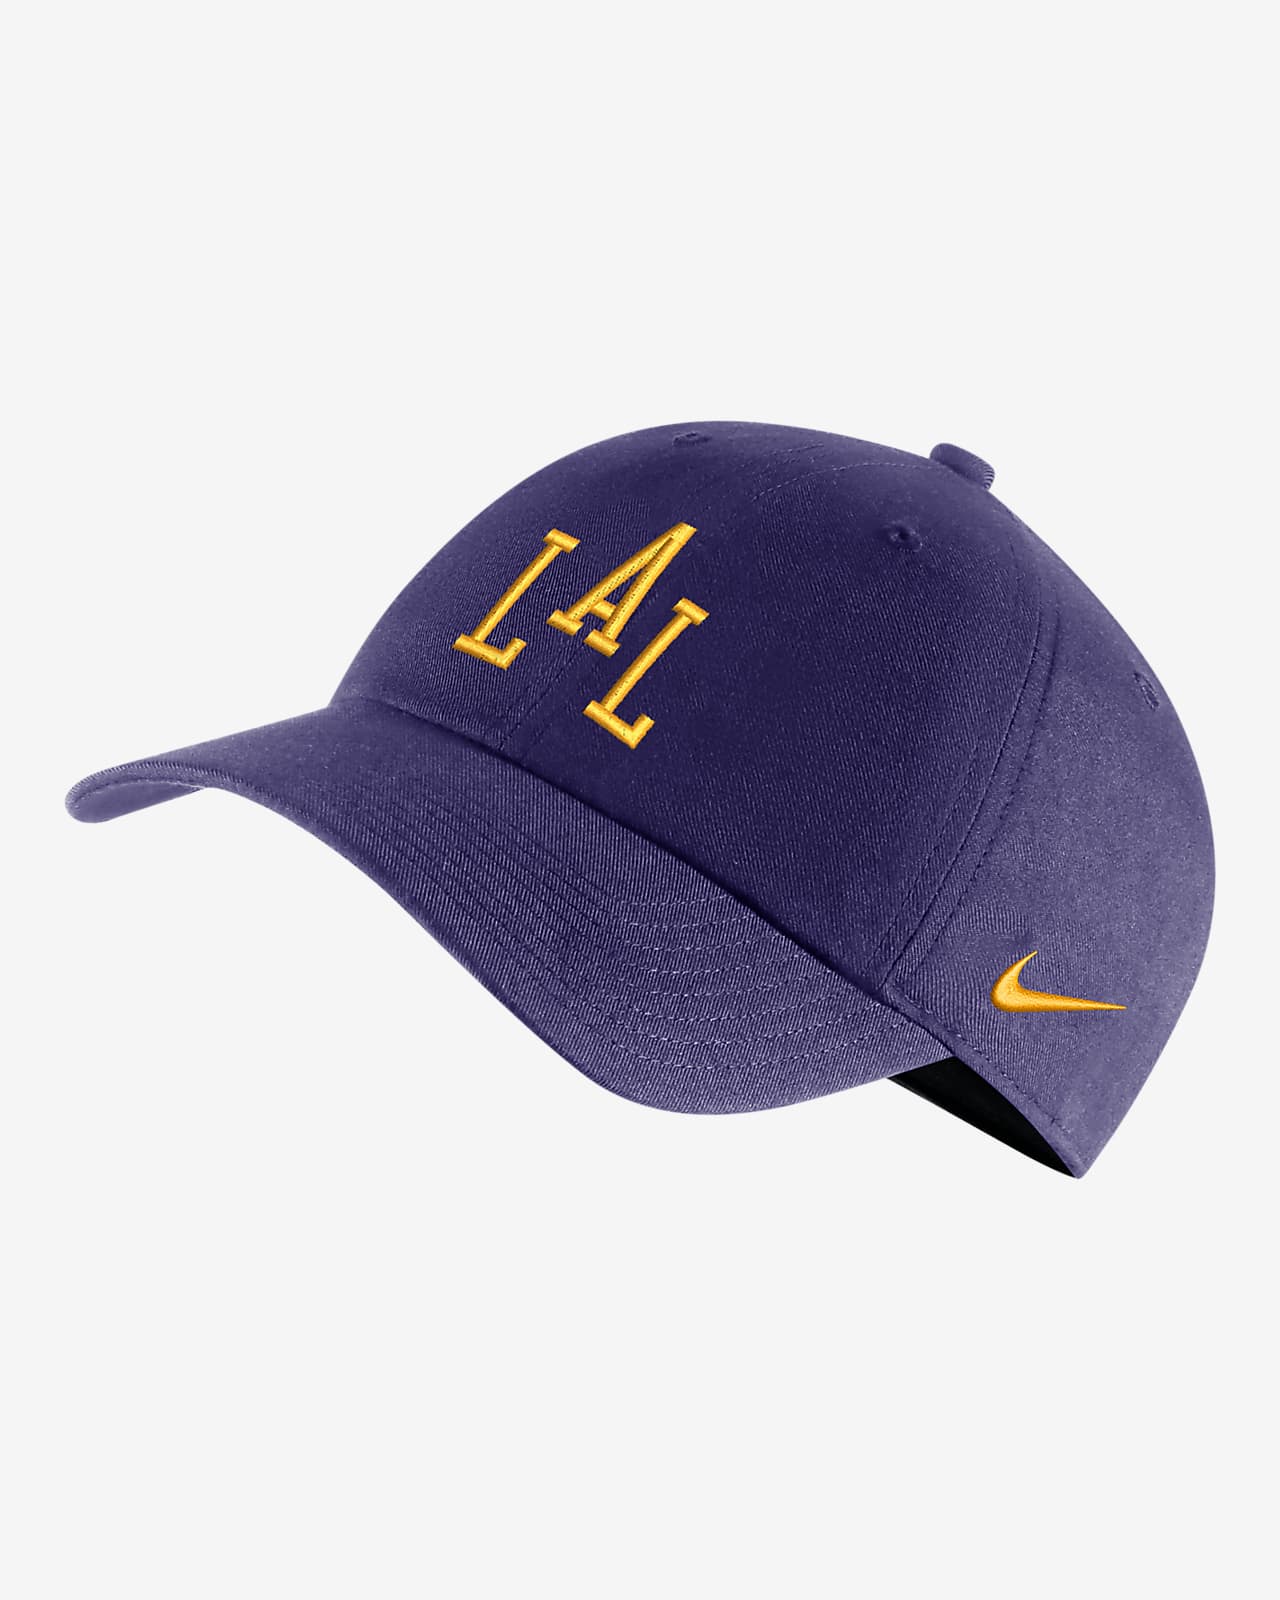 Los Angeles Lakers City Edition Nike NBA Adjustable Cap